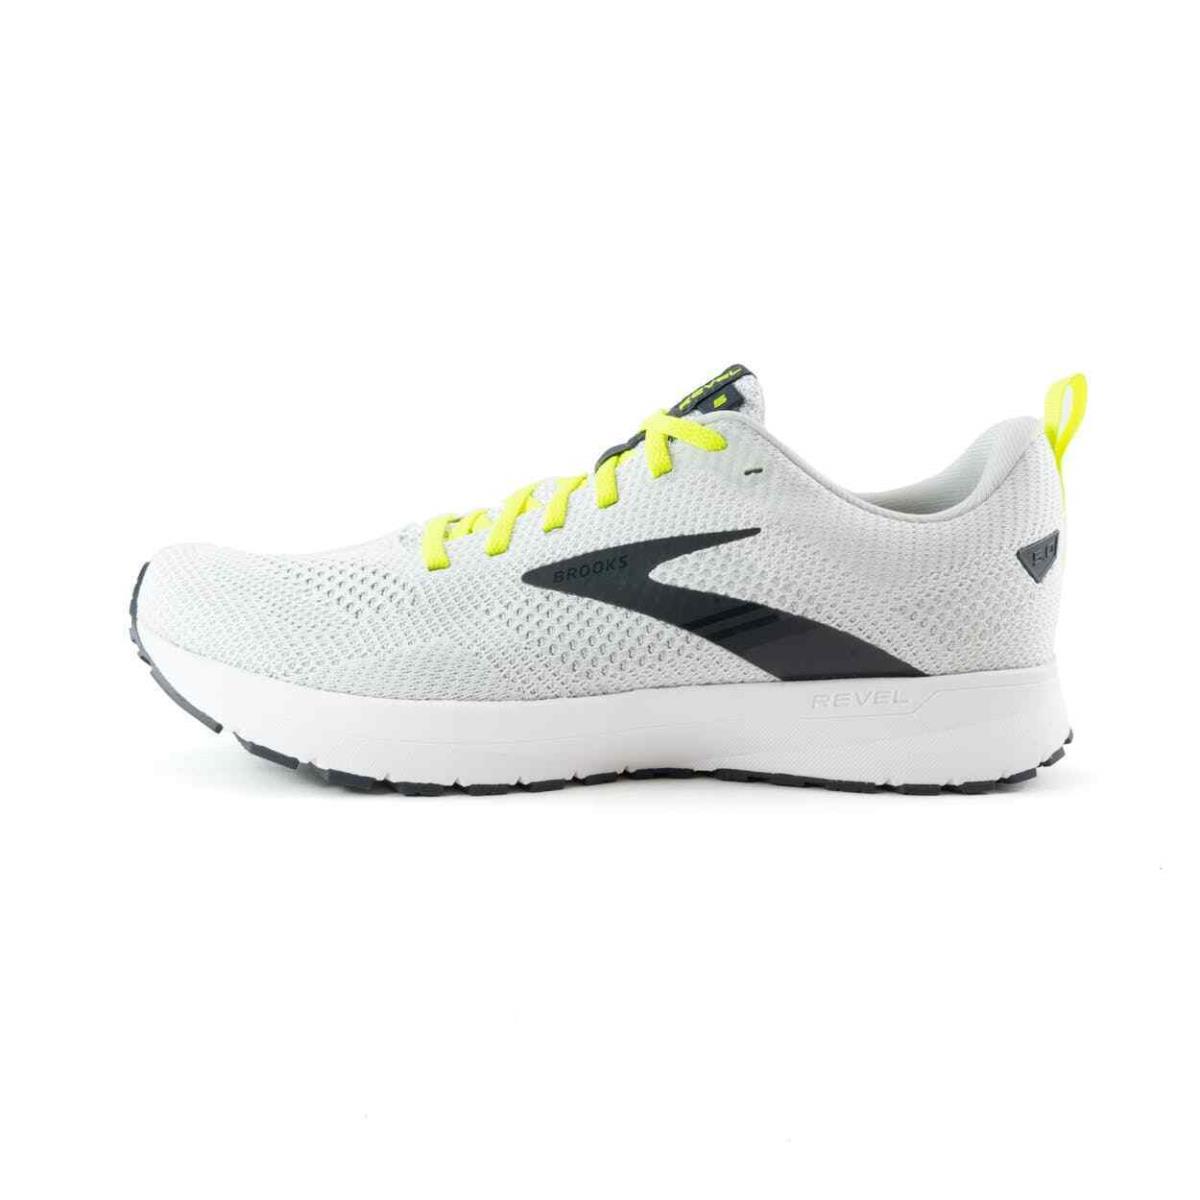 Brooks Revel 5 Off White Black Neon Mens Outdoor Running Shoes 110374 1D 182